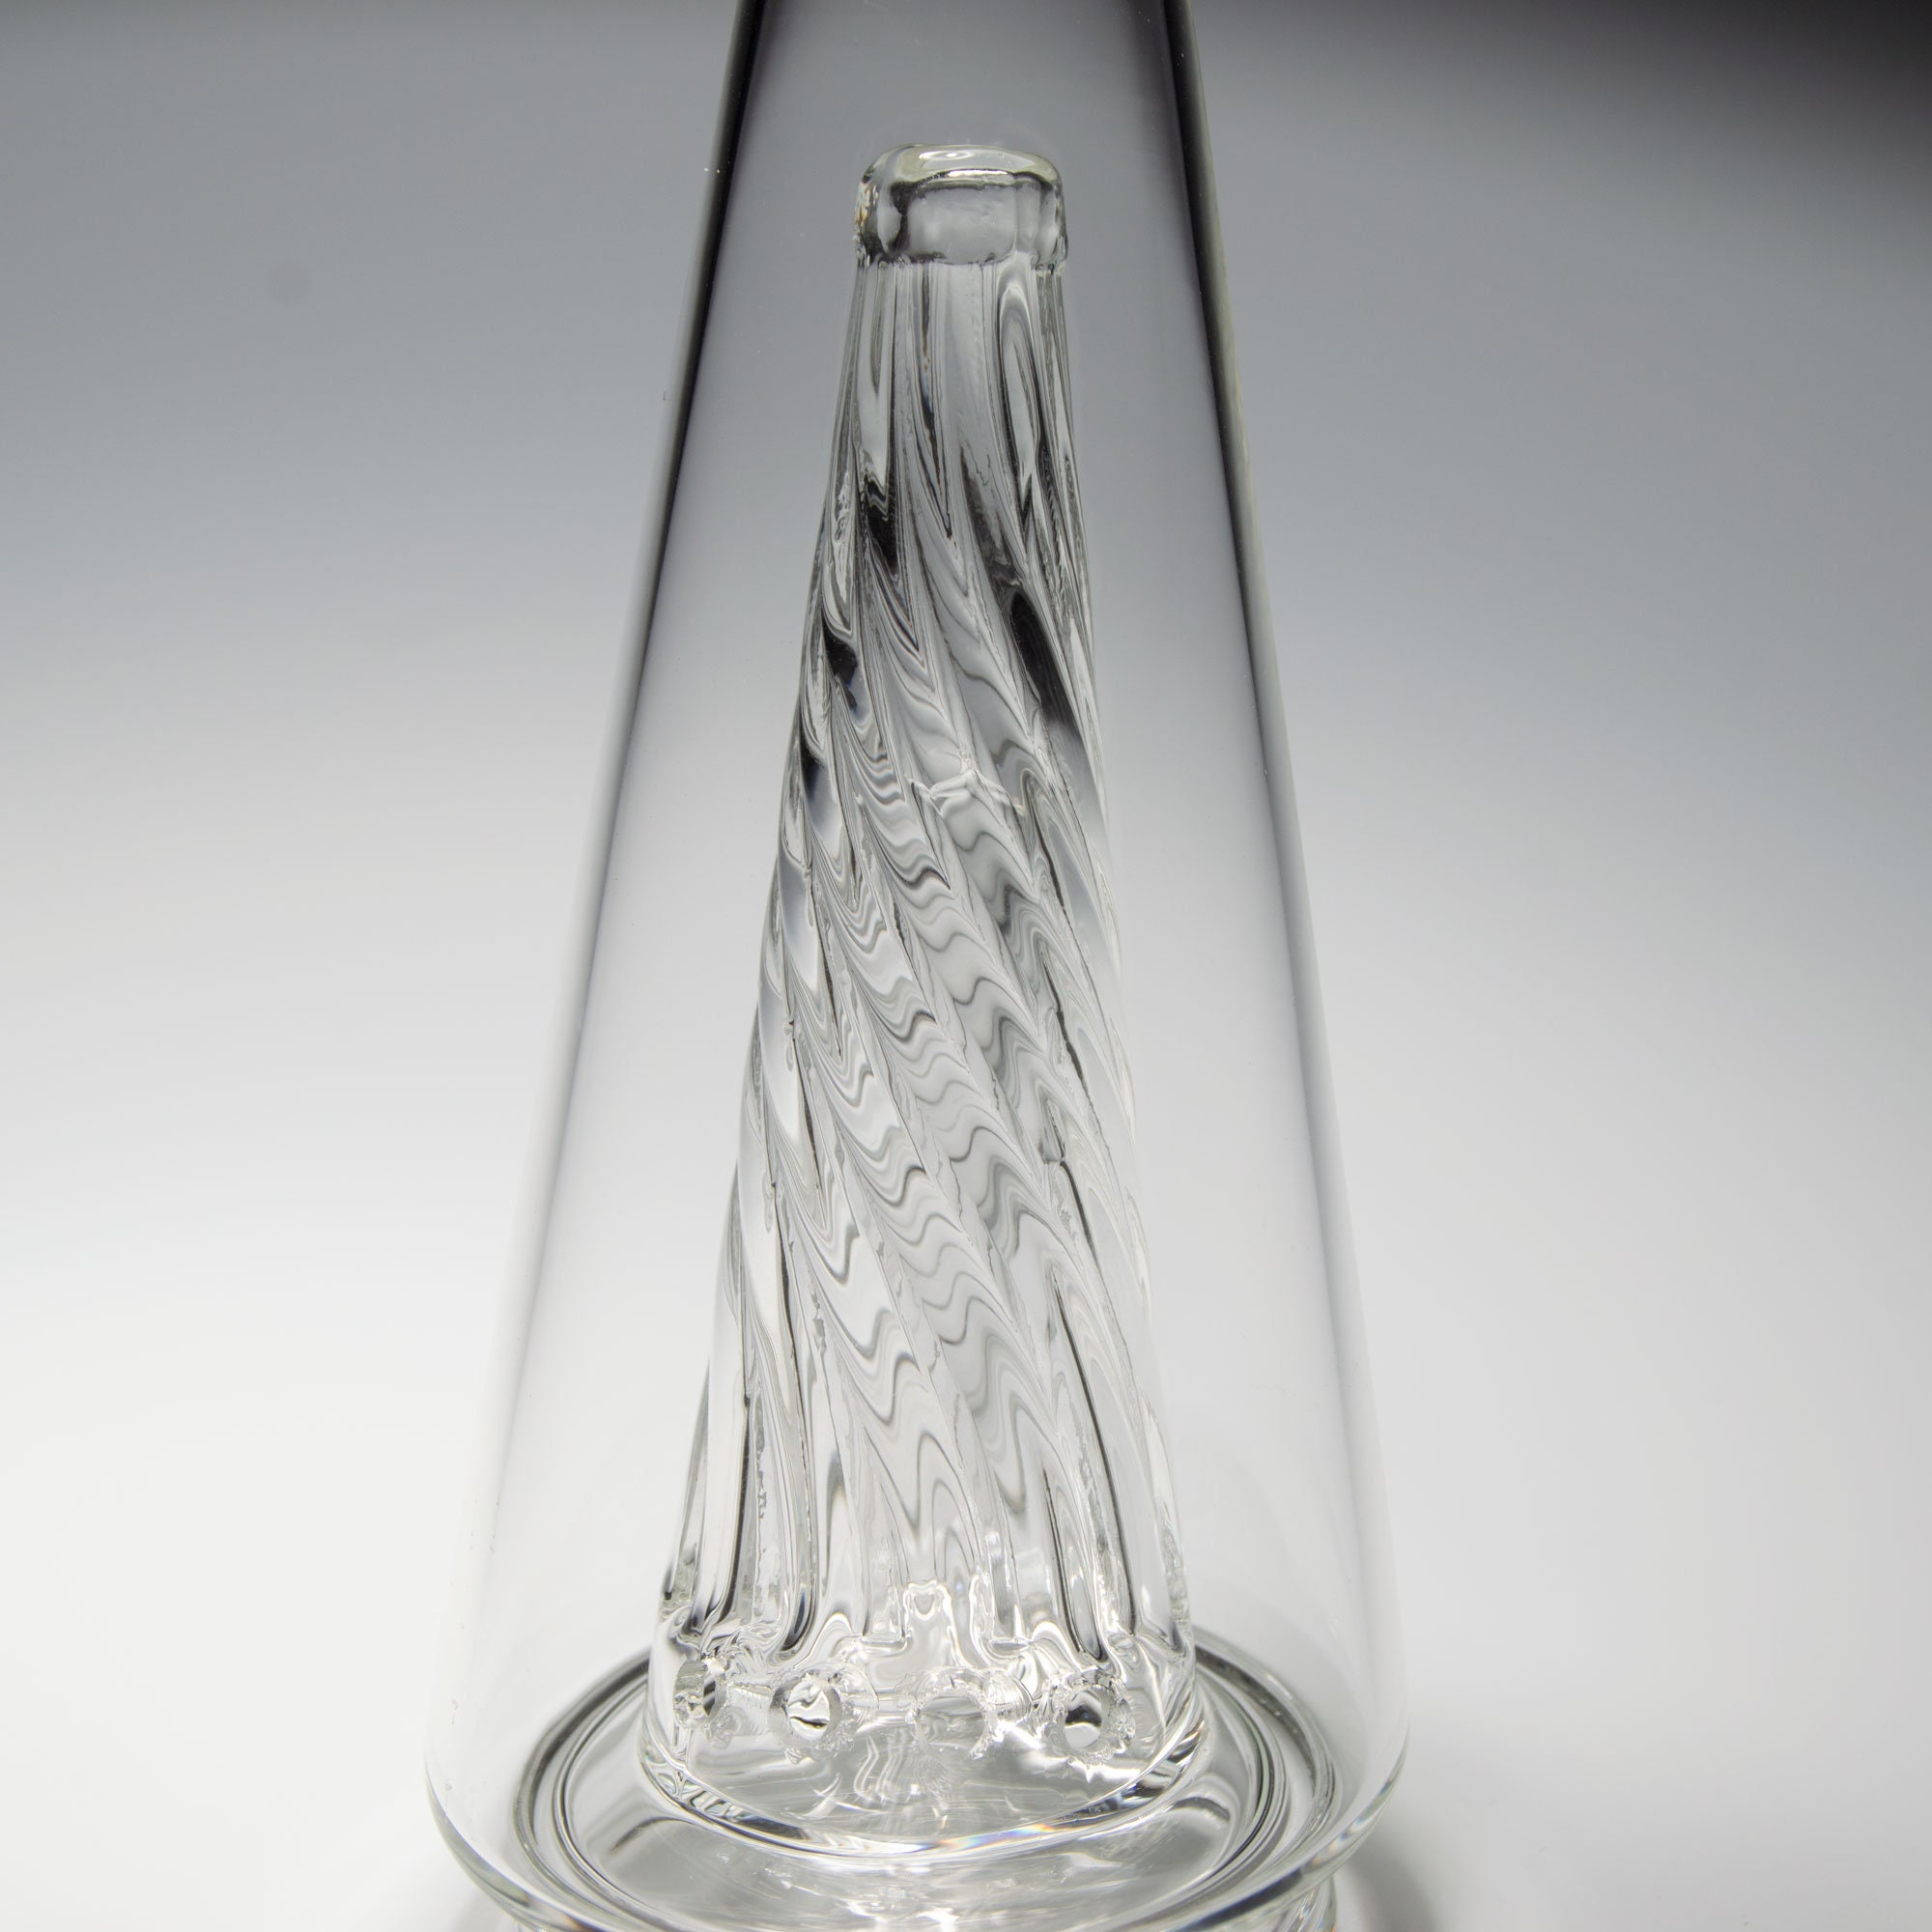 Puffco Peak Pro Glass recommendations? : r/puffco